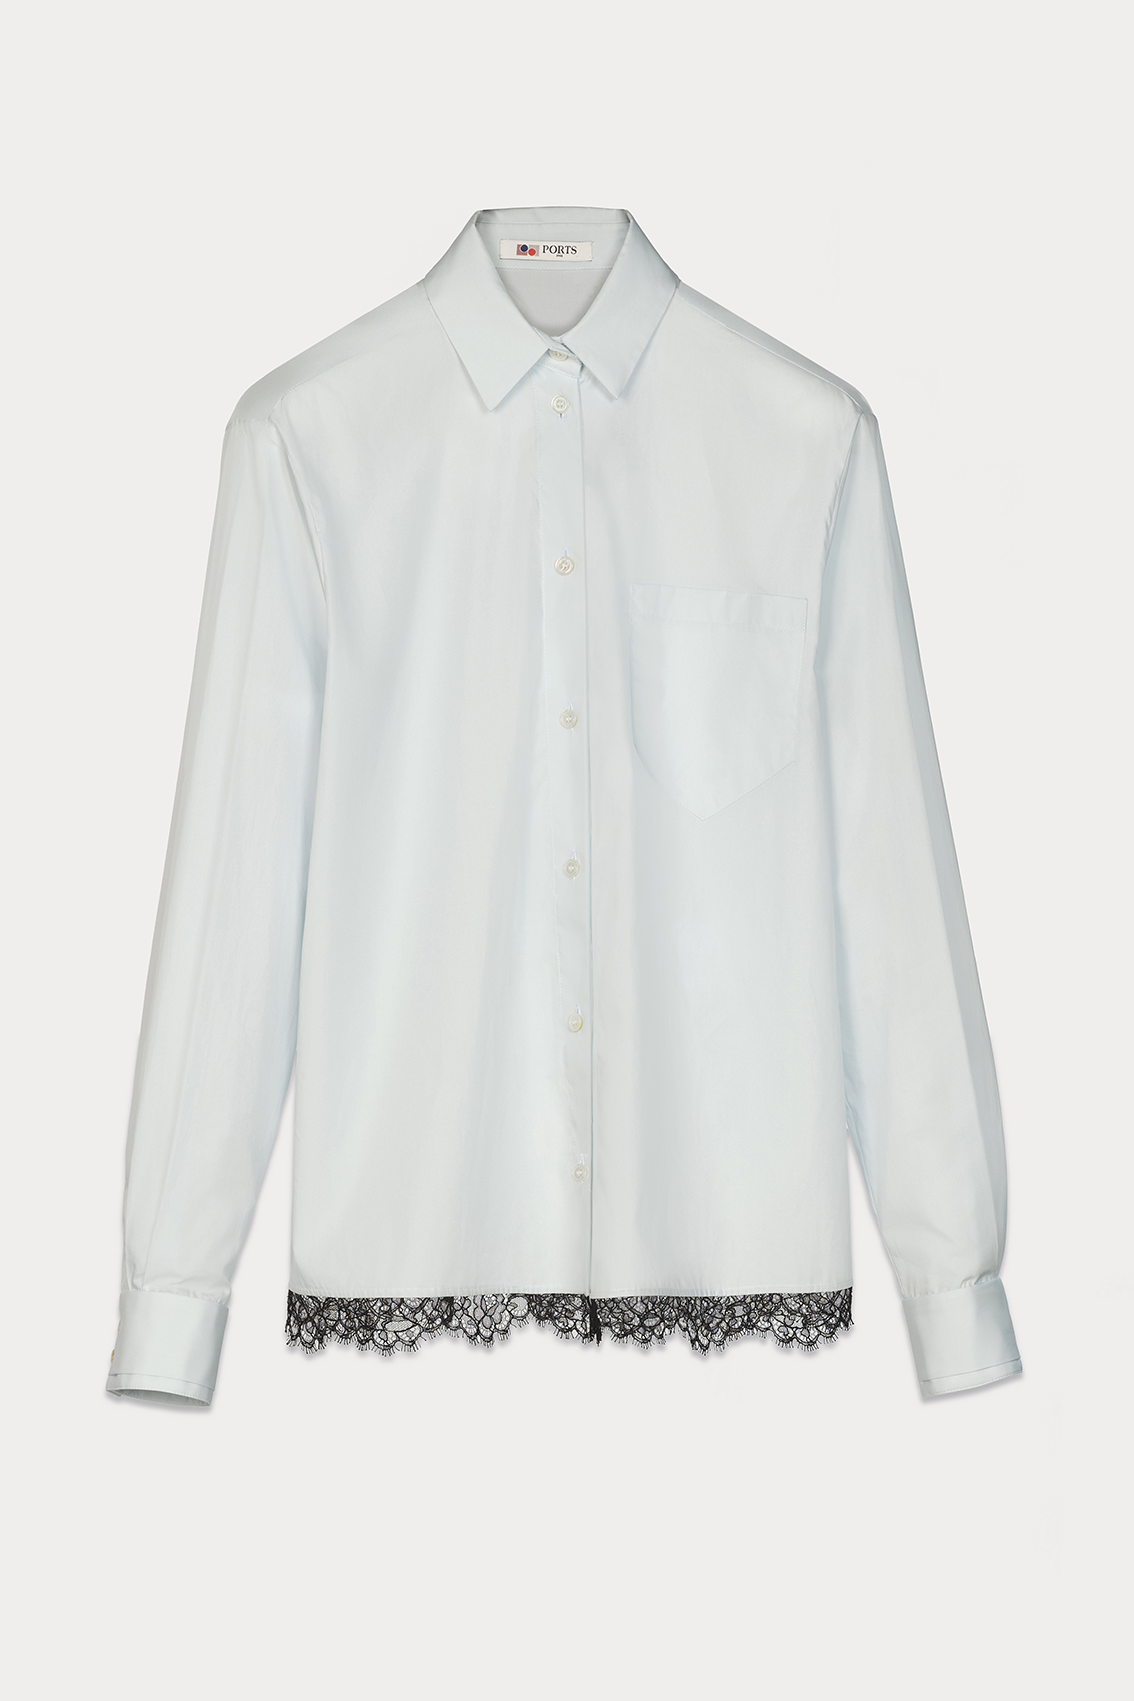 Lace Fringe White Button Down Shirt